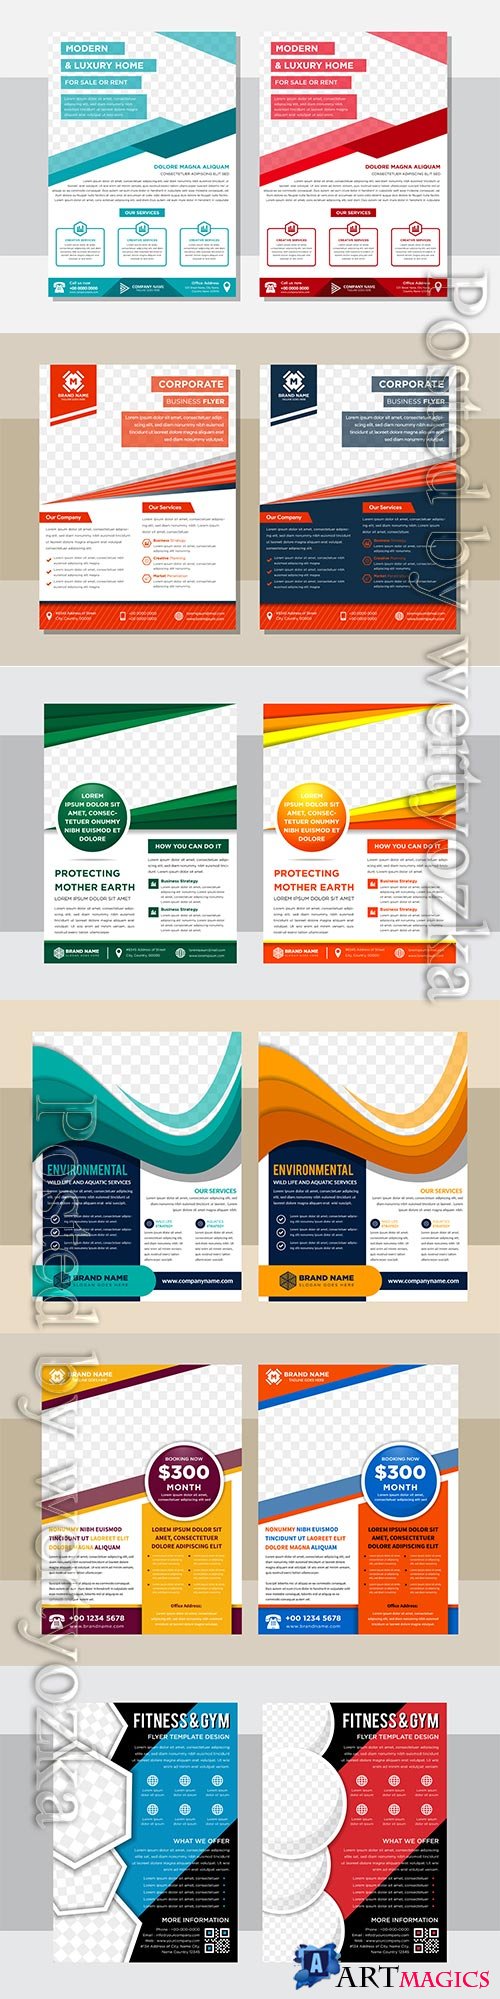 Business flyer template design, brochure vector illustration # 4